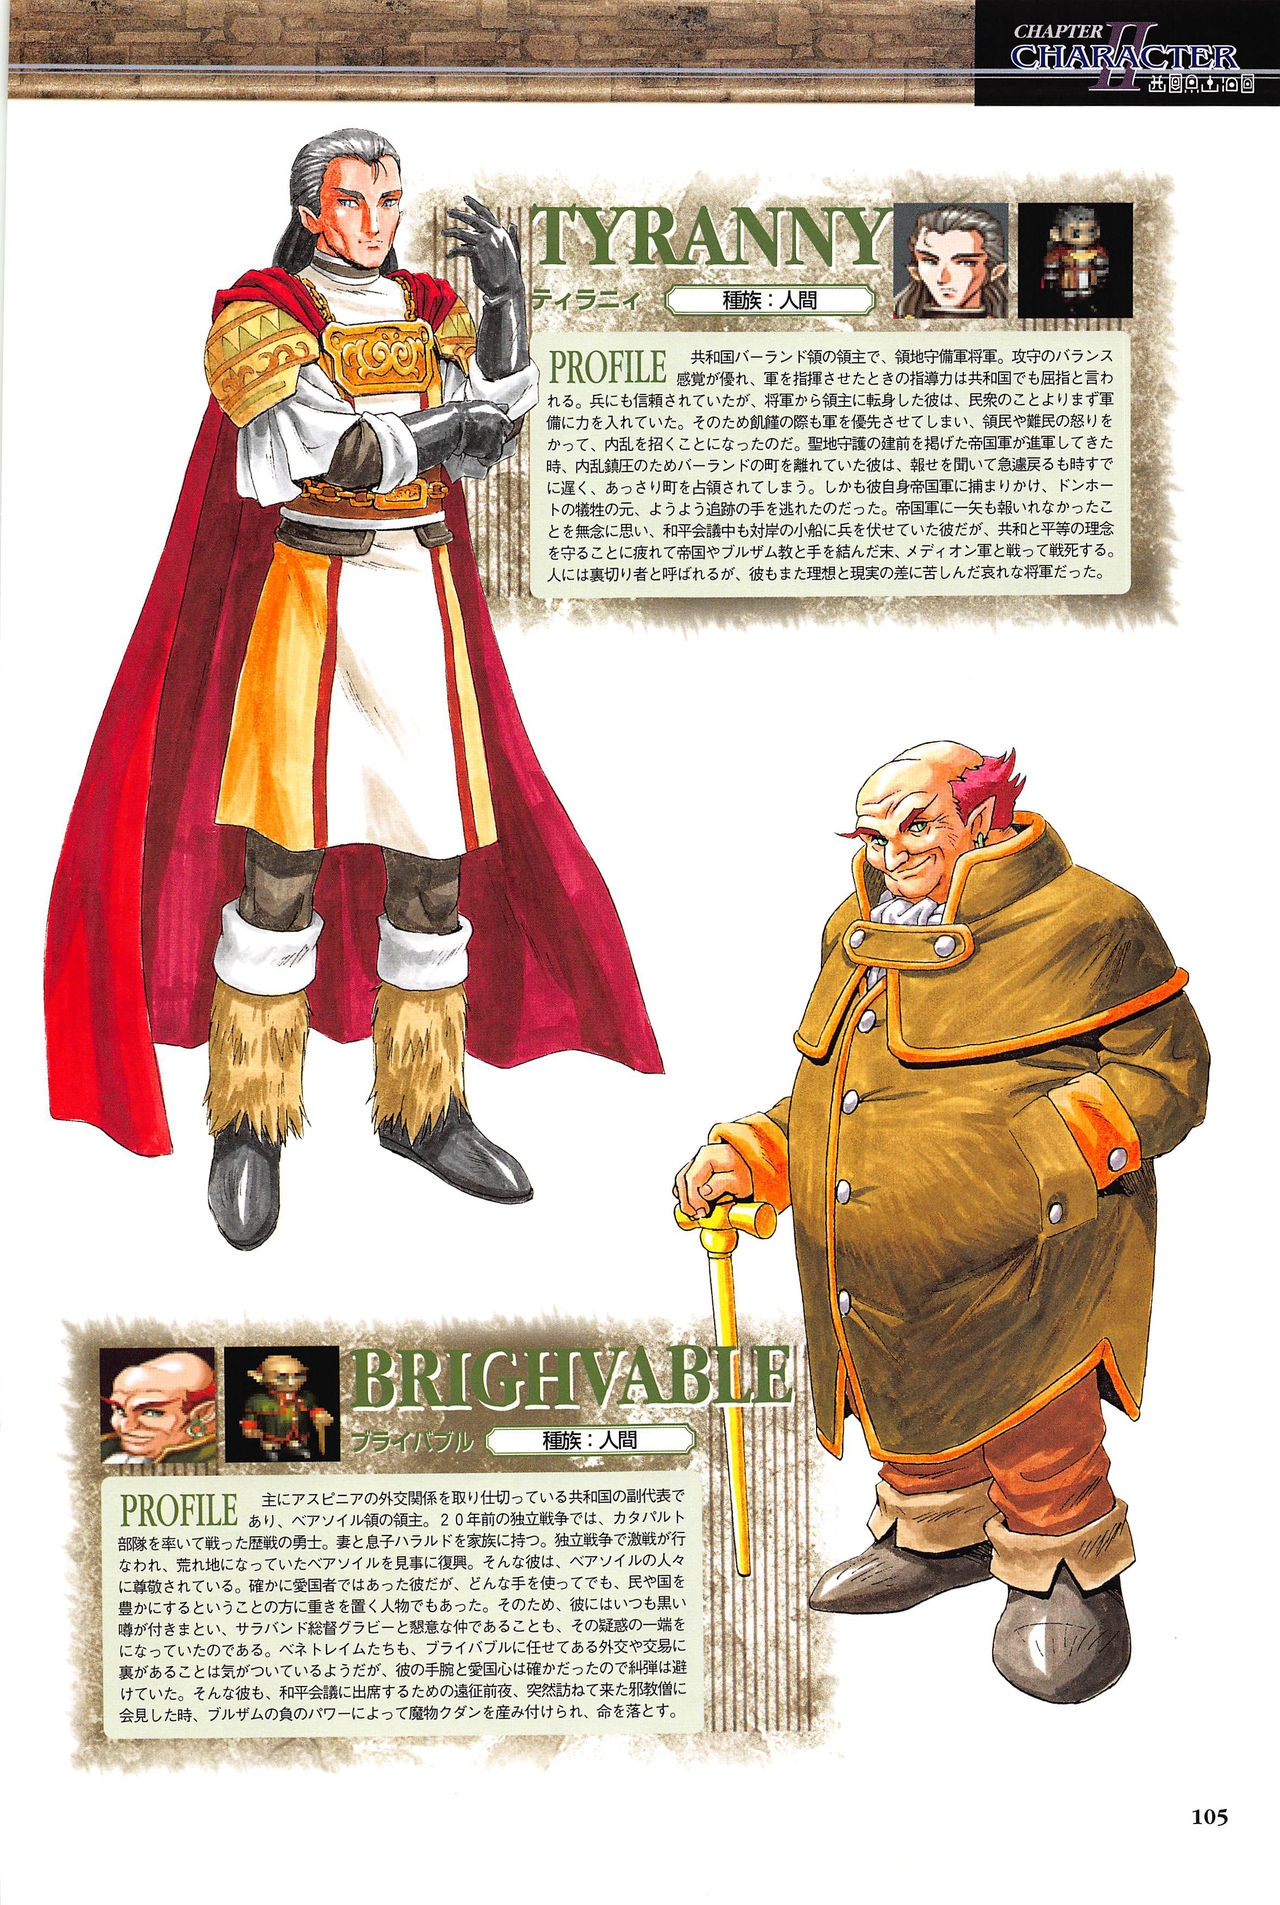 [Kajiyama  Hiroshi] Shining Force III Official Setting Collection Artbook 110